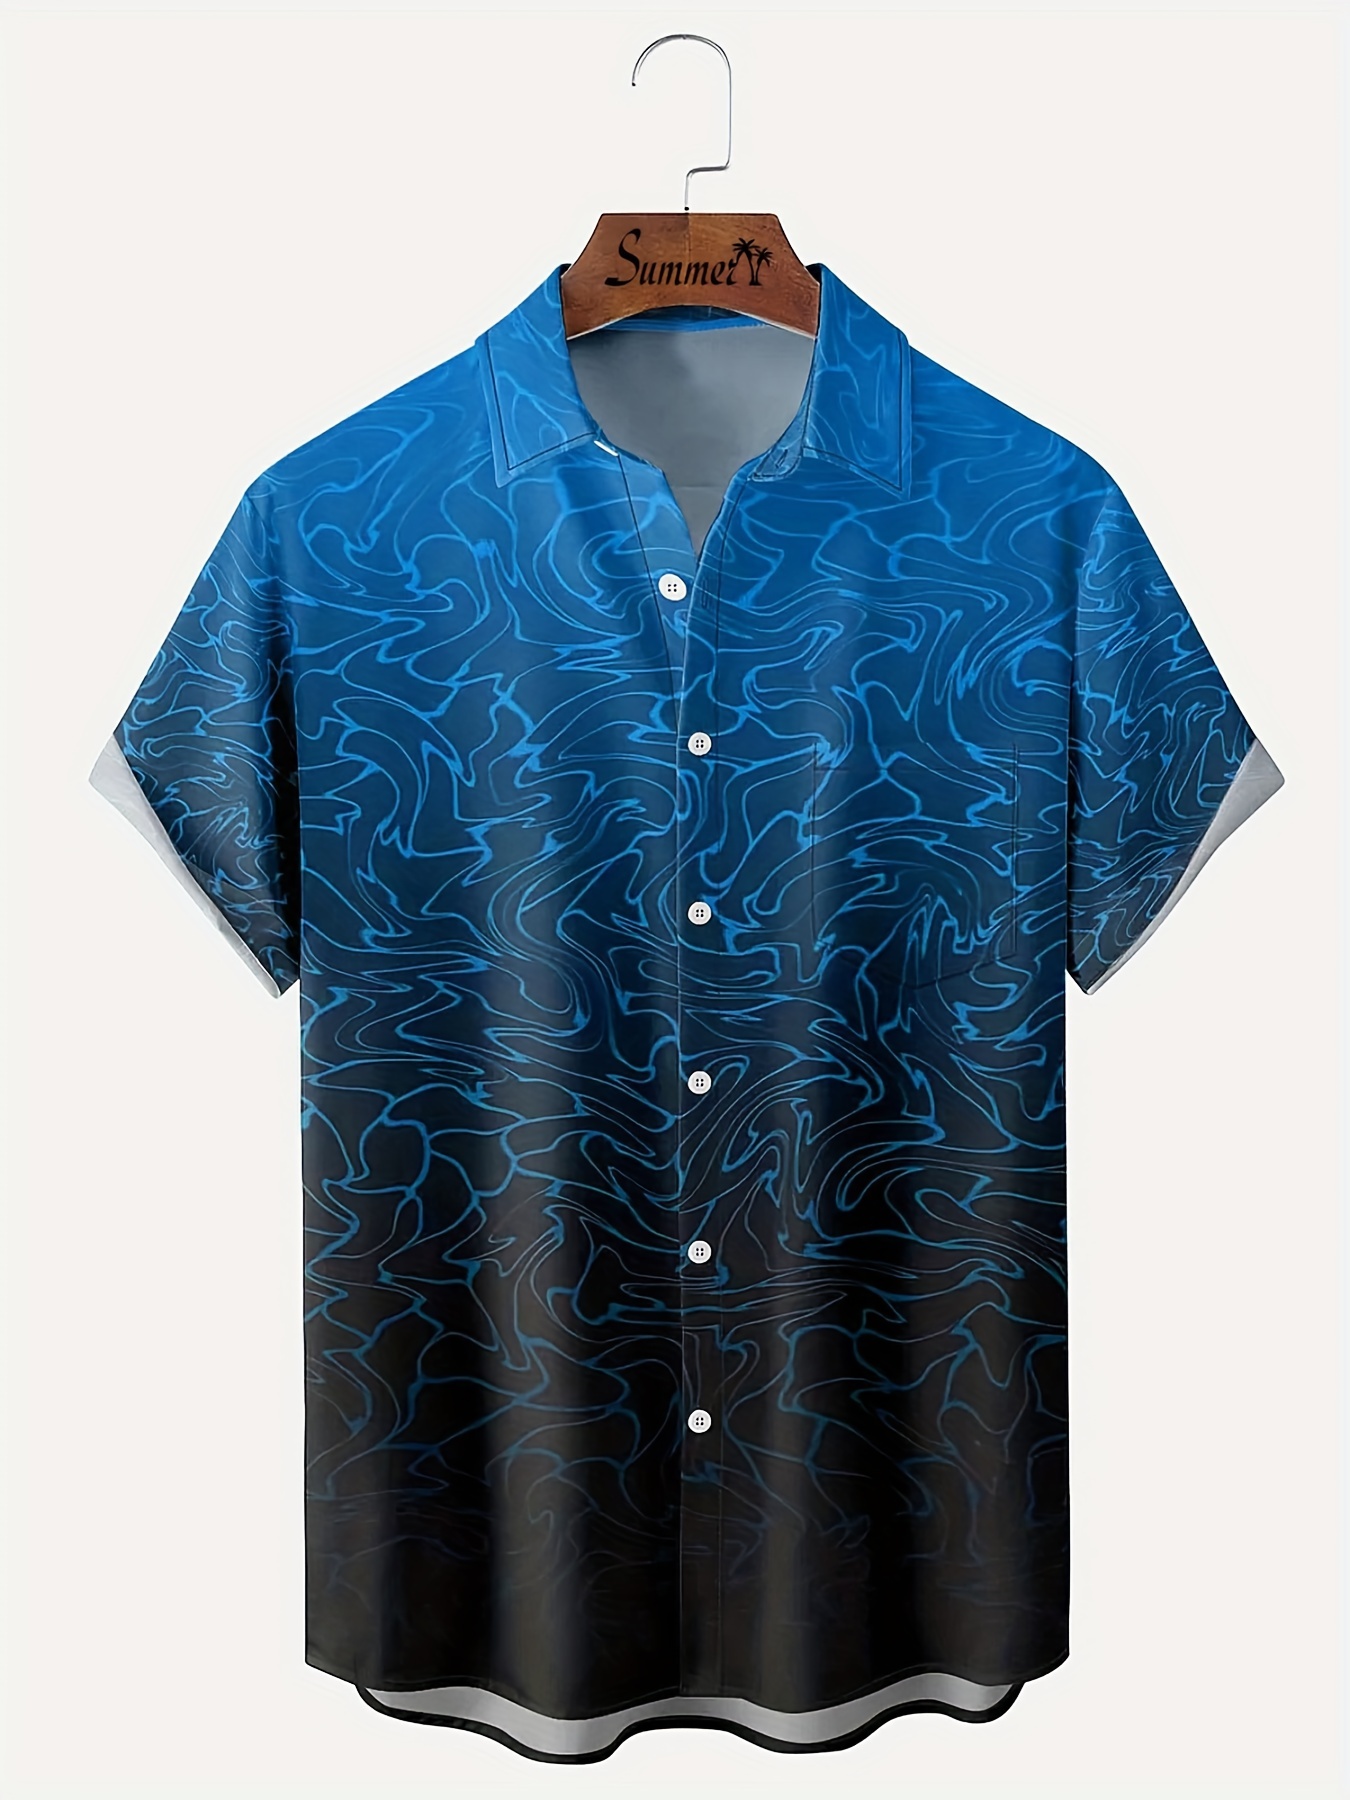  LONGZUVS Mens Hawaiian Shirt Gradient/Stripe Print Tank Top  Sports Sleeveless T-Shirt Casual Short Sleeve Beach Summer Shirts : ביגוד,  נעליים ותכשיטים